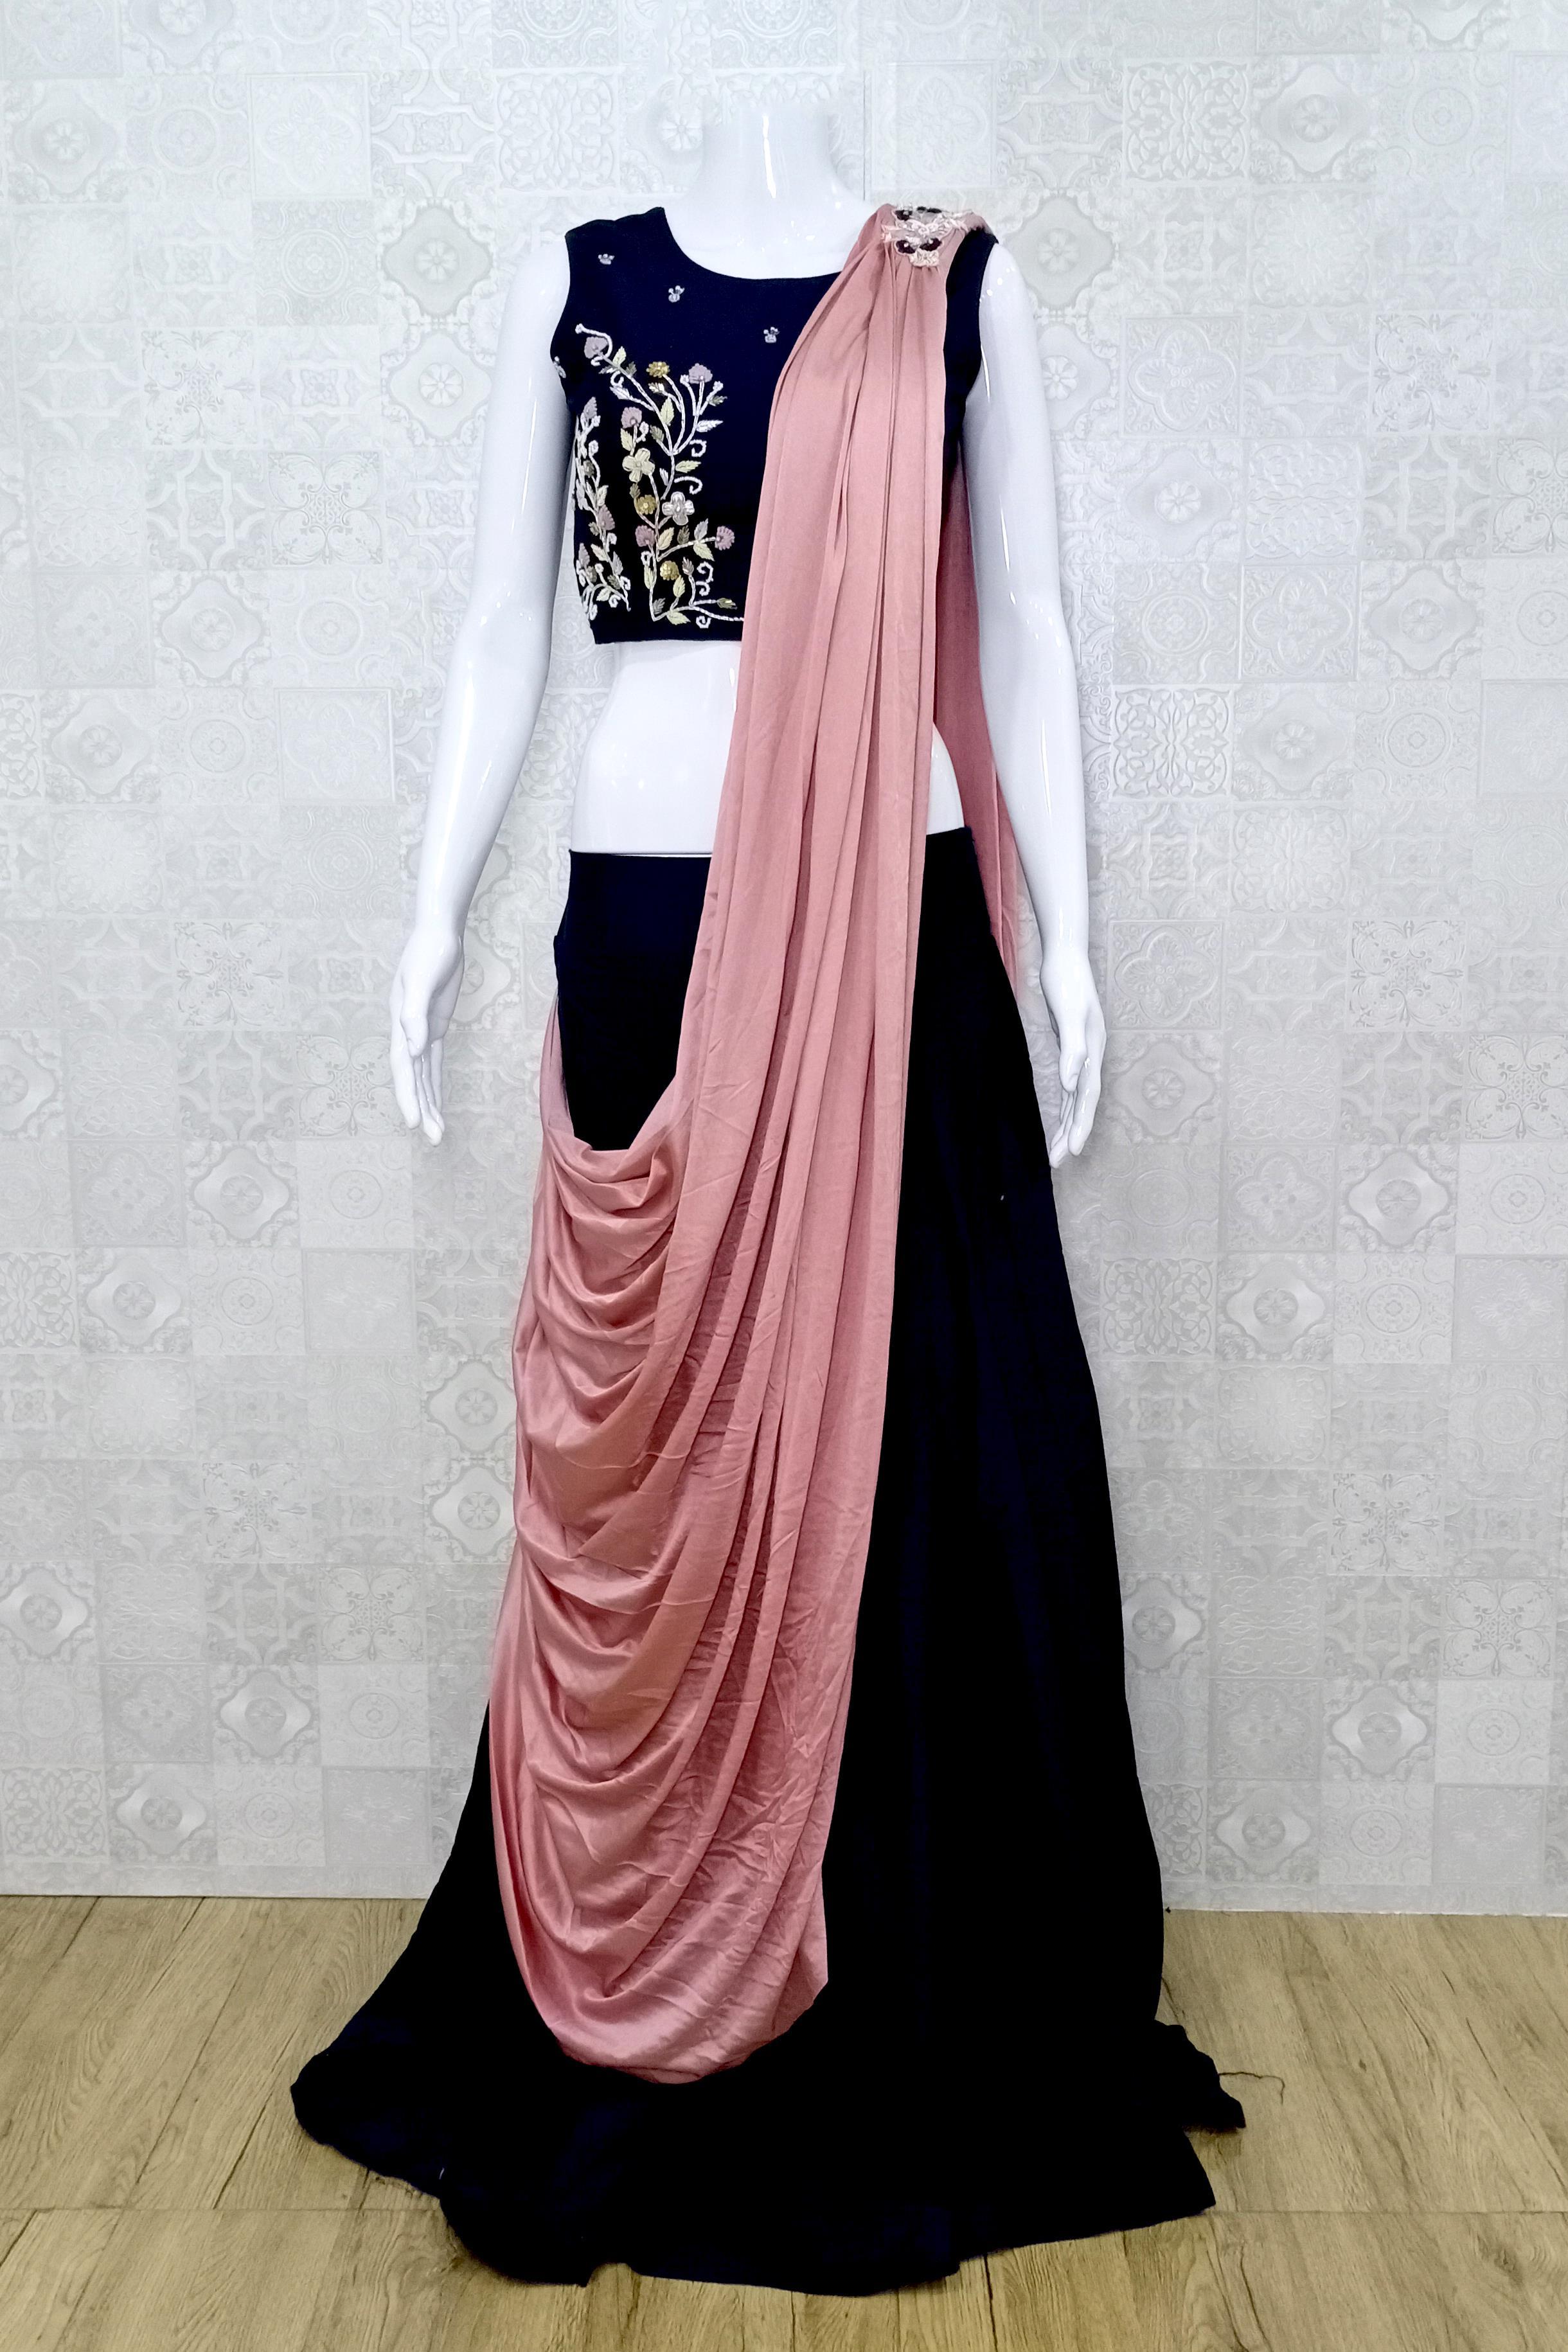 1 or 2? | Lehenga saree design, Saree blouse designs, Lehenga style saree